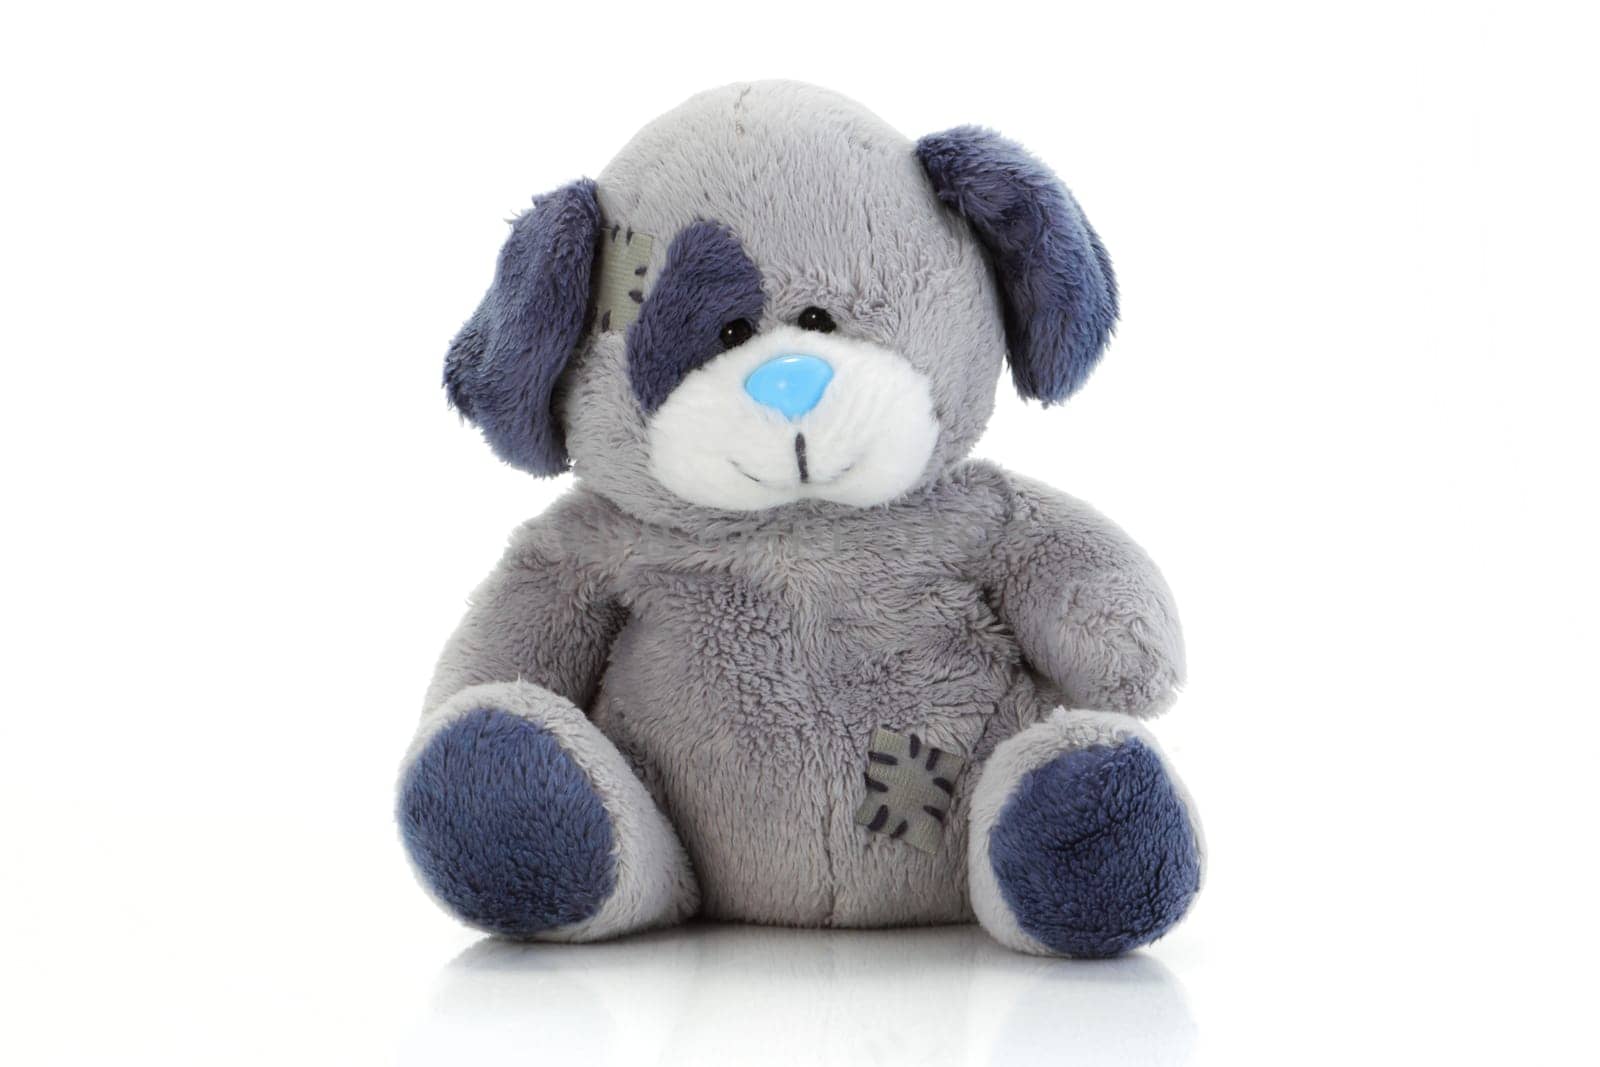 A cute Teddy Bear grey and blue